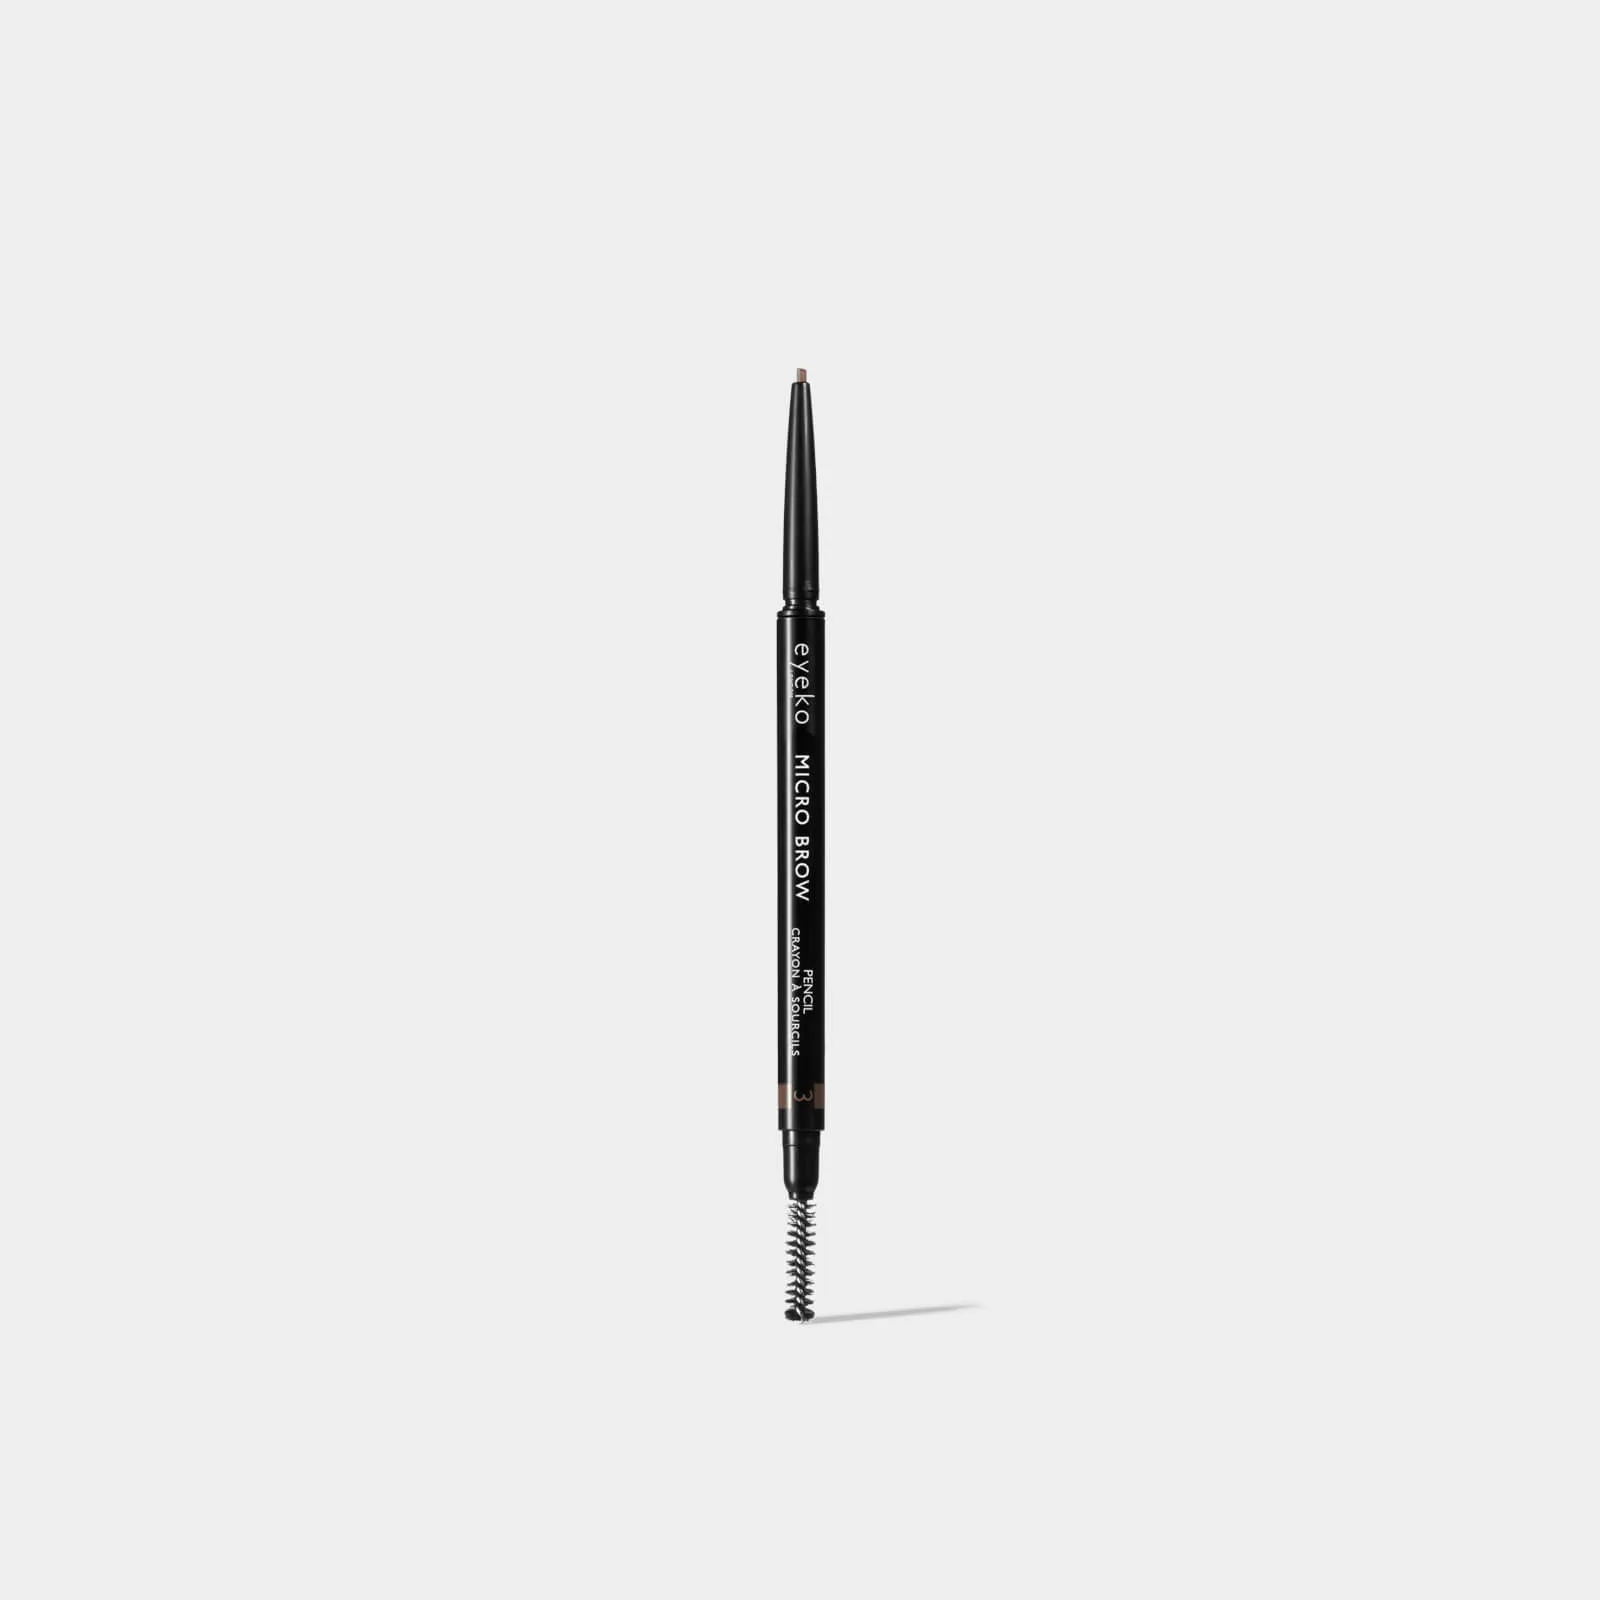  Micro Brow Precision Pencil 2g (Various Shades) - 3 - Medium Brown